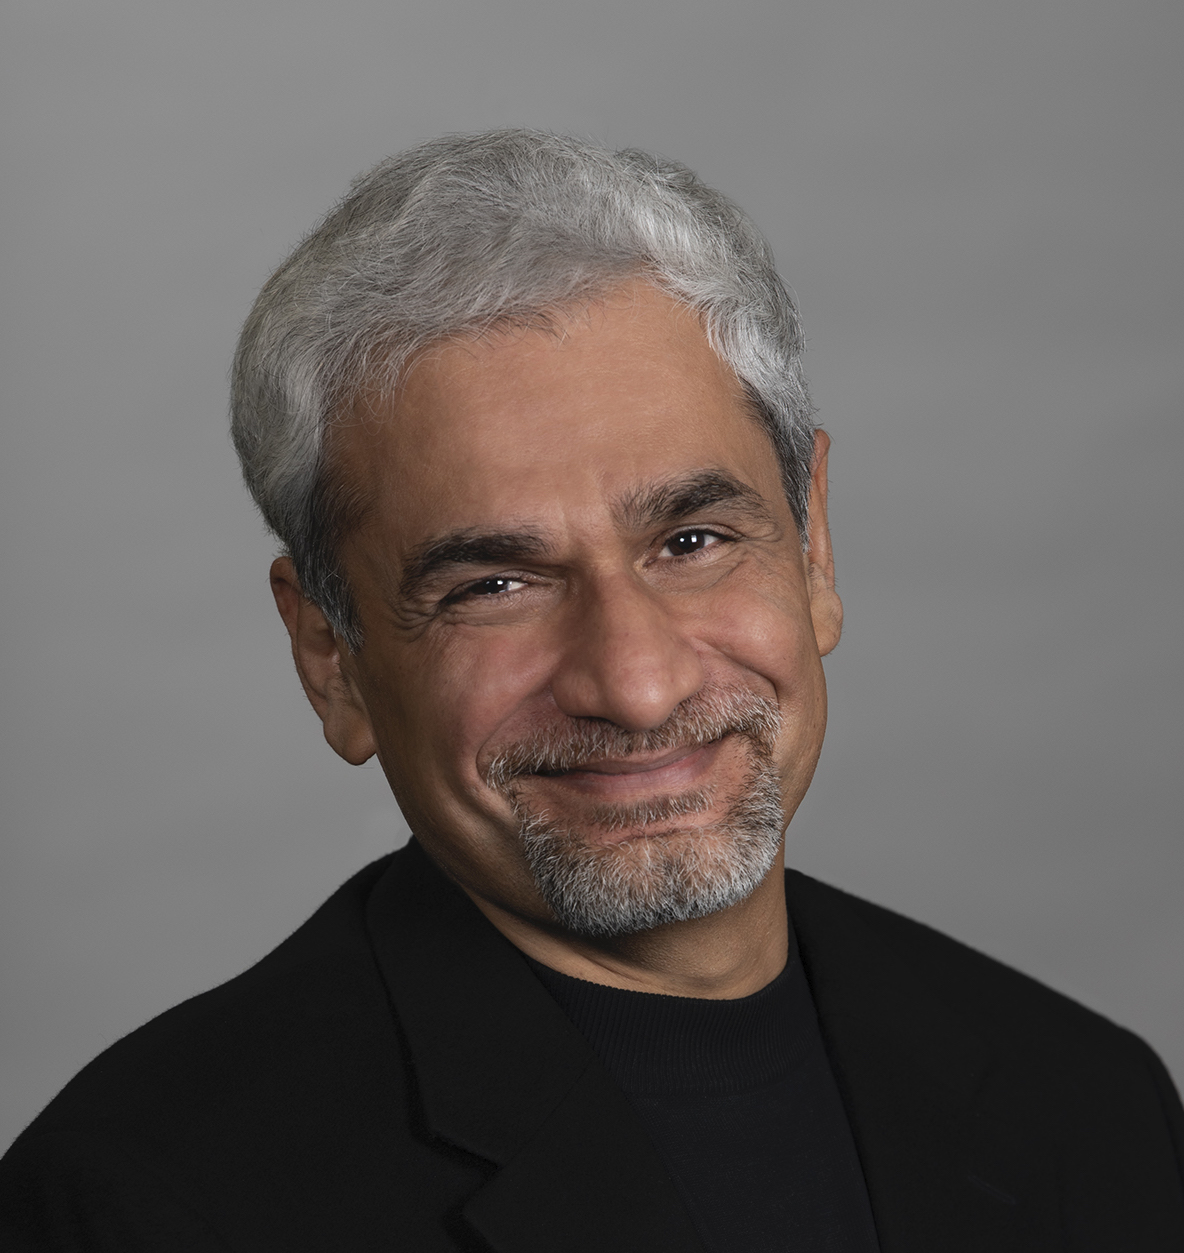 Man with grey hair and black shirt